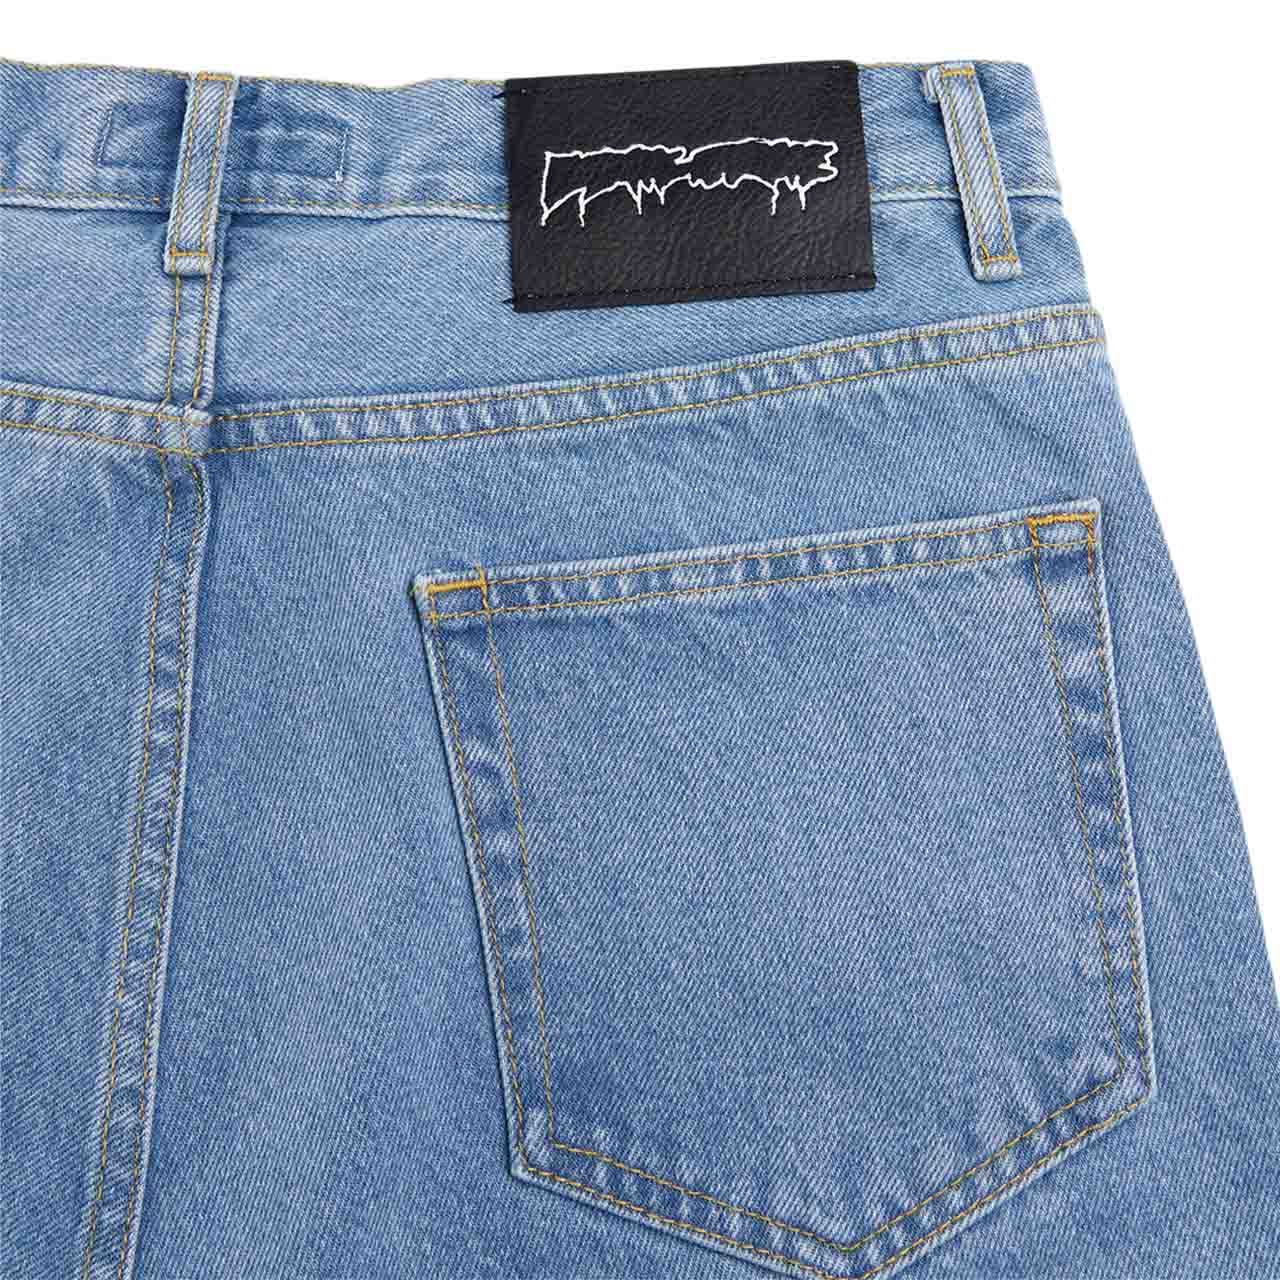 EIGHTYFIVE LOGO PRINT - Relaxed fit jeans - dark blue/dark-blue denim -  Zalando.de